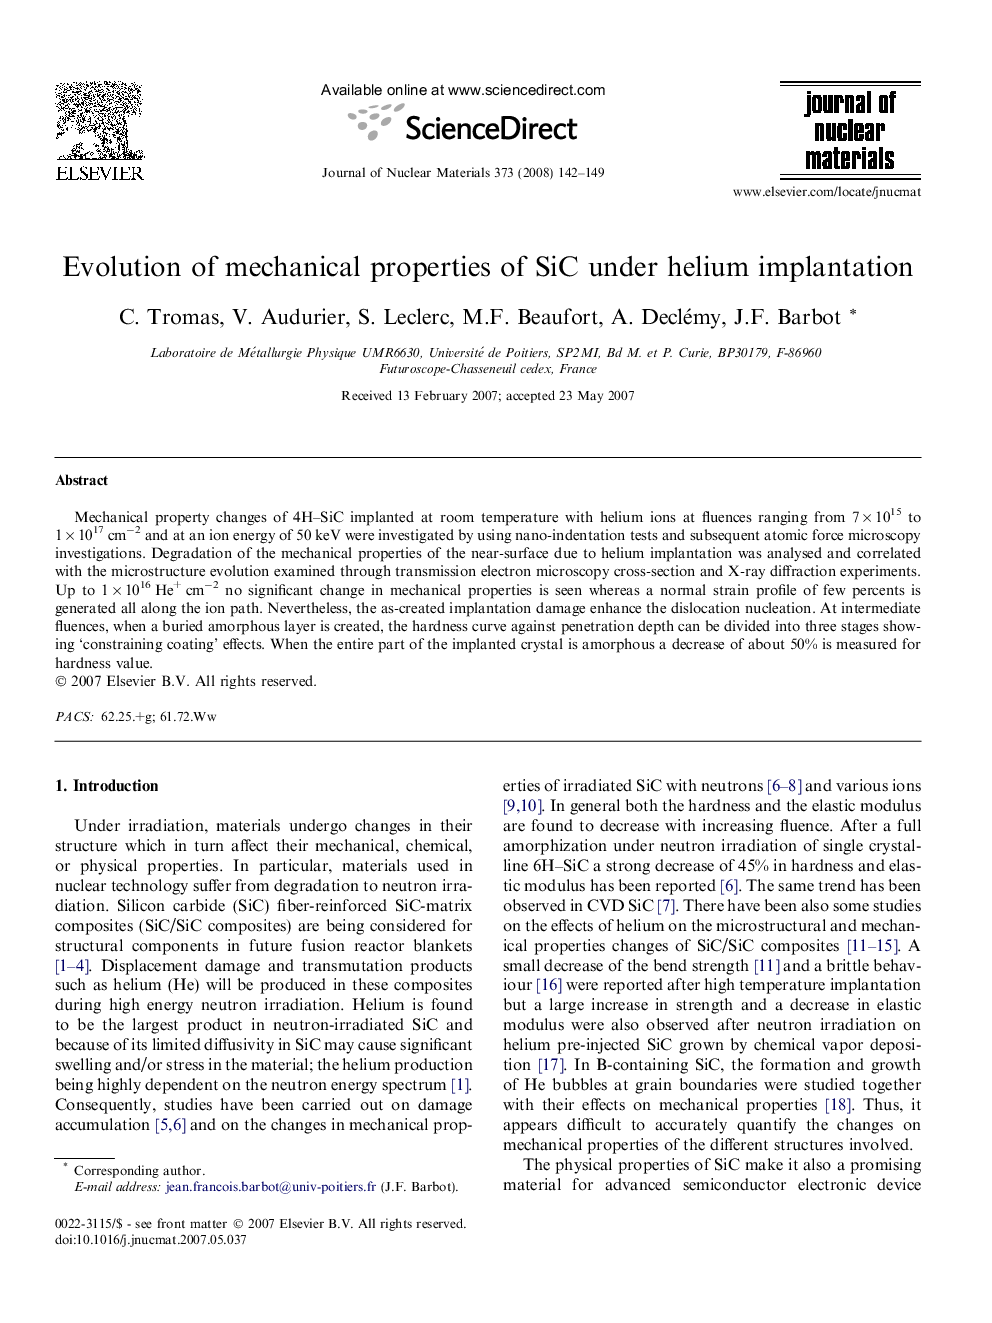 Evolution of mechanical properties of SiC under helium implantation